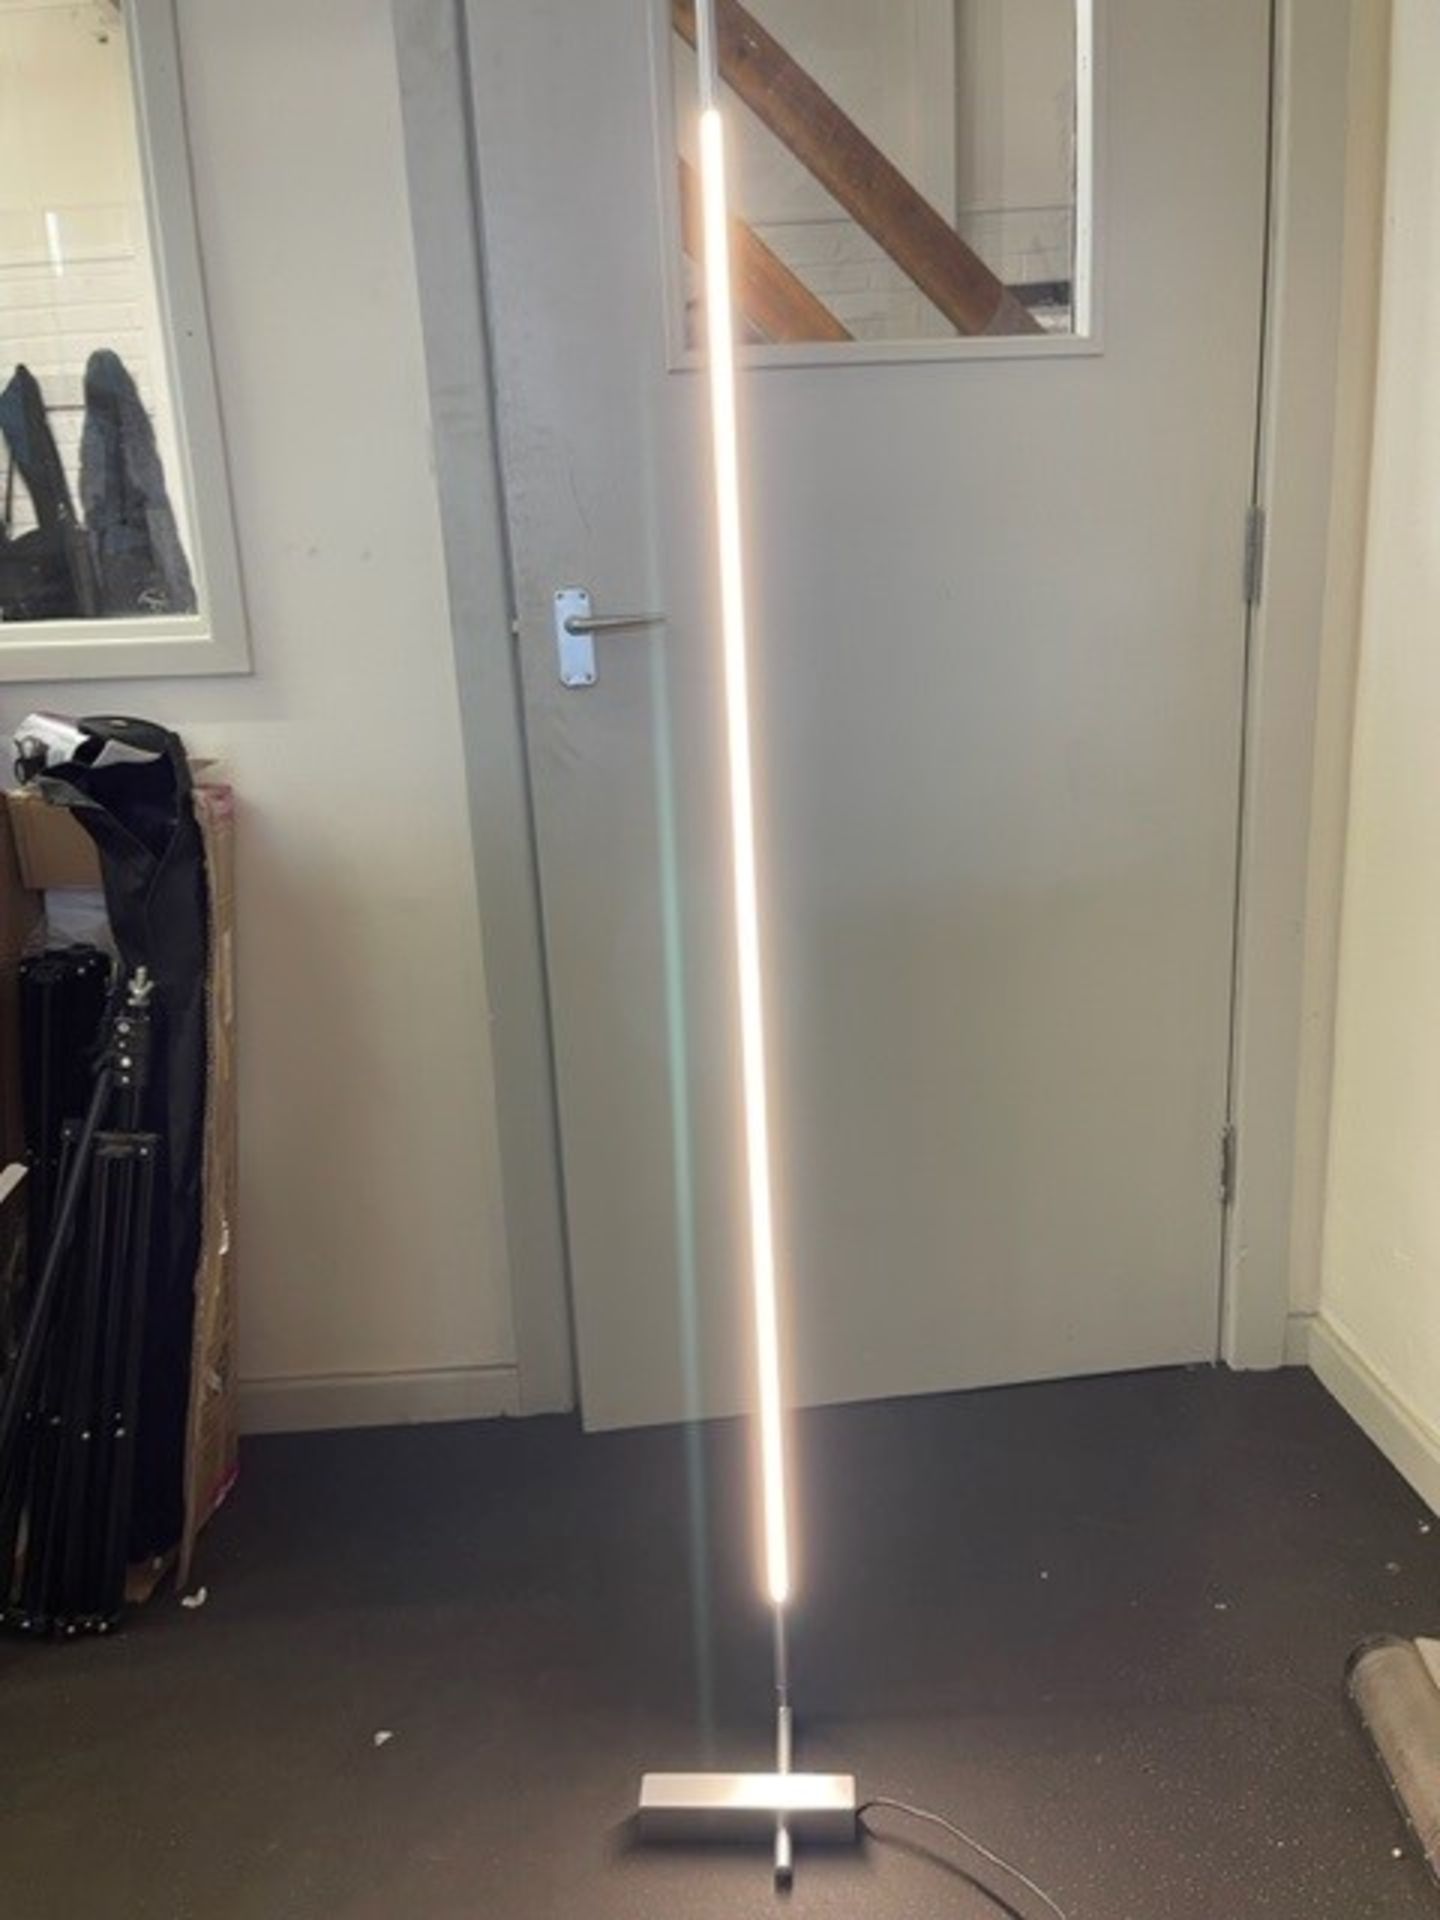 Heals Saber LED Floor Light Silver RRP 199.00 tested working see image Saber LED Floor Lamp - The